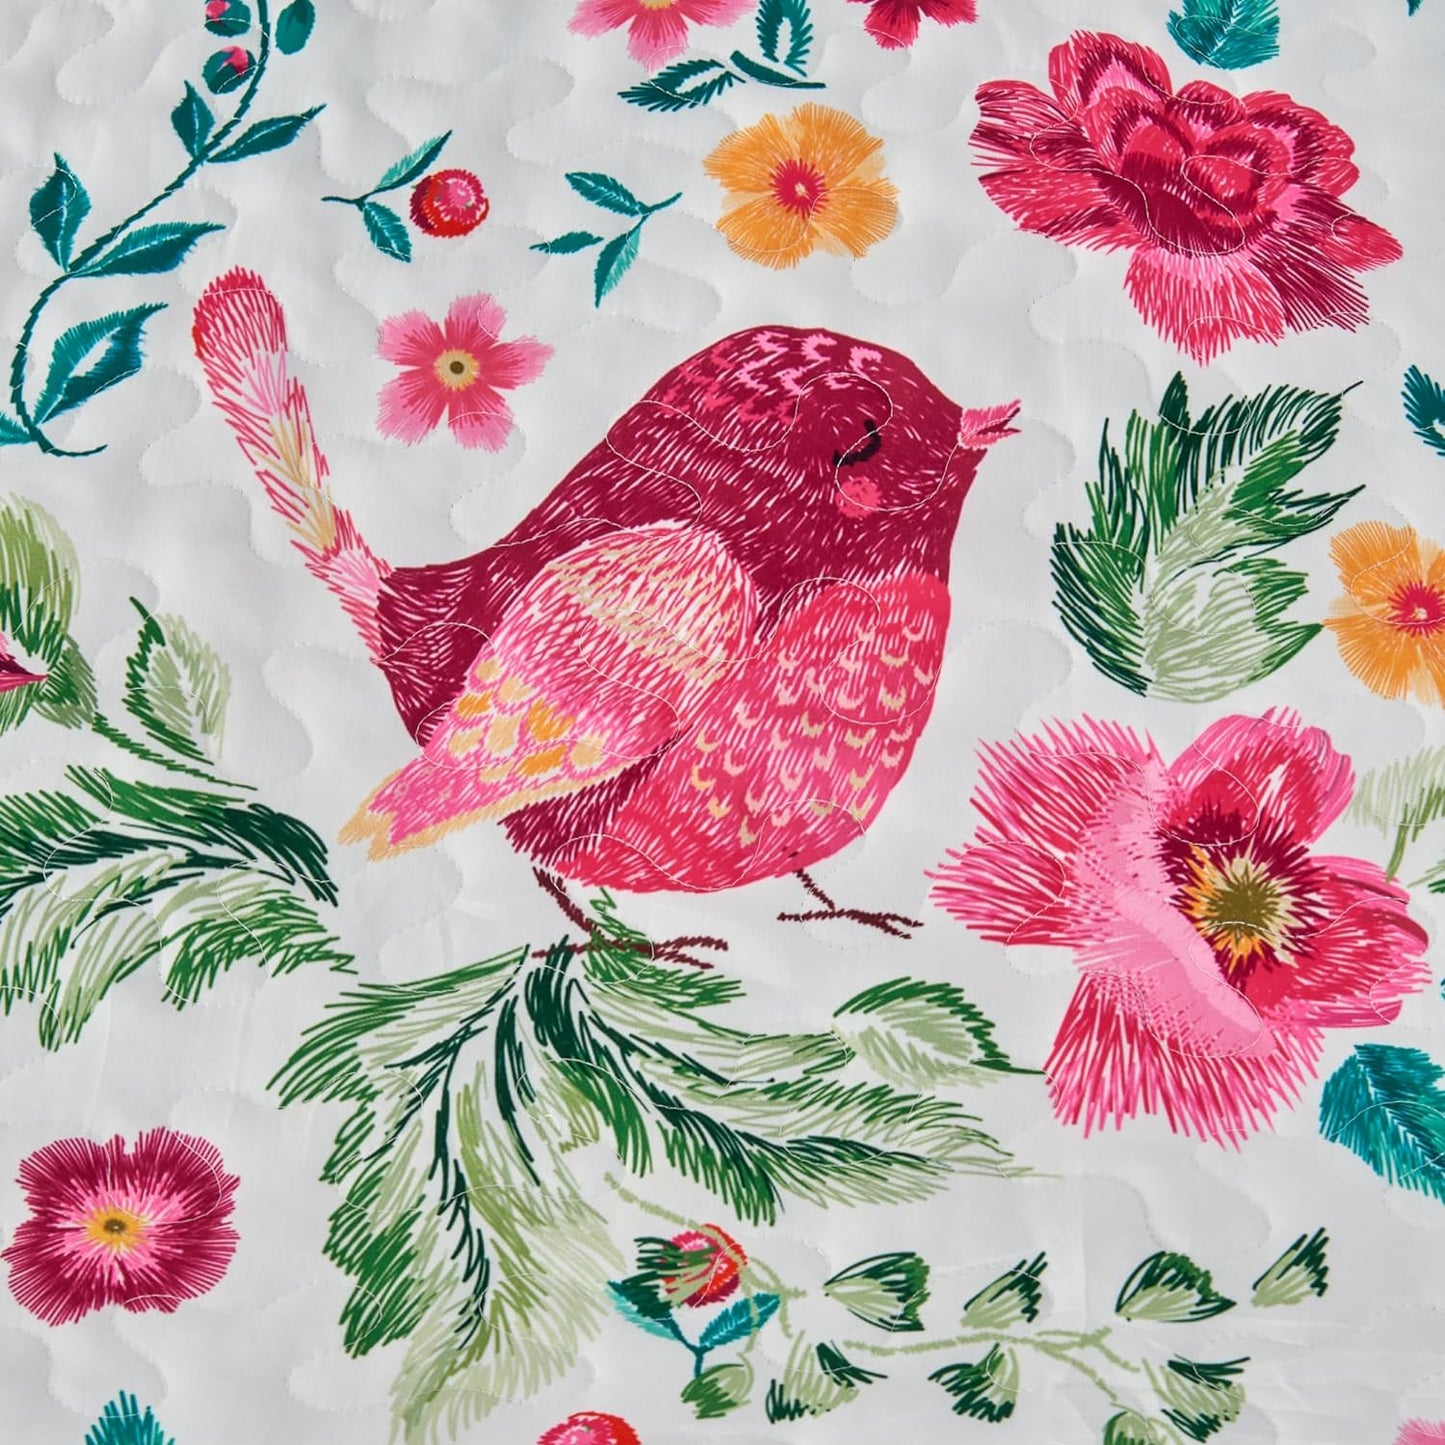 Floral Bird 4 Piece Reversible  Quilt Set